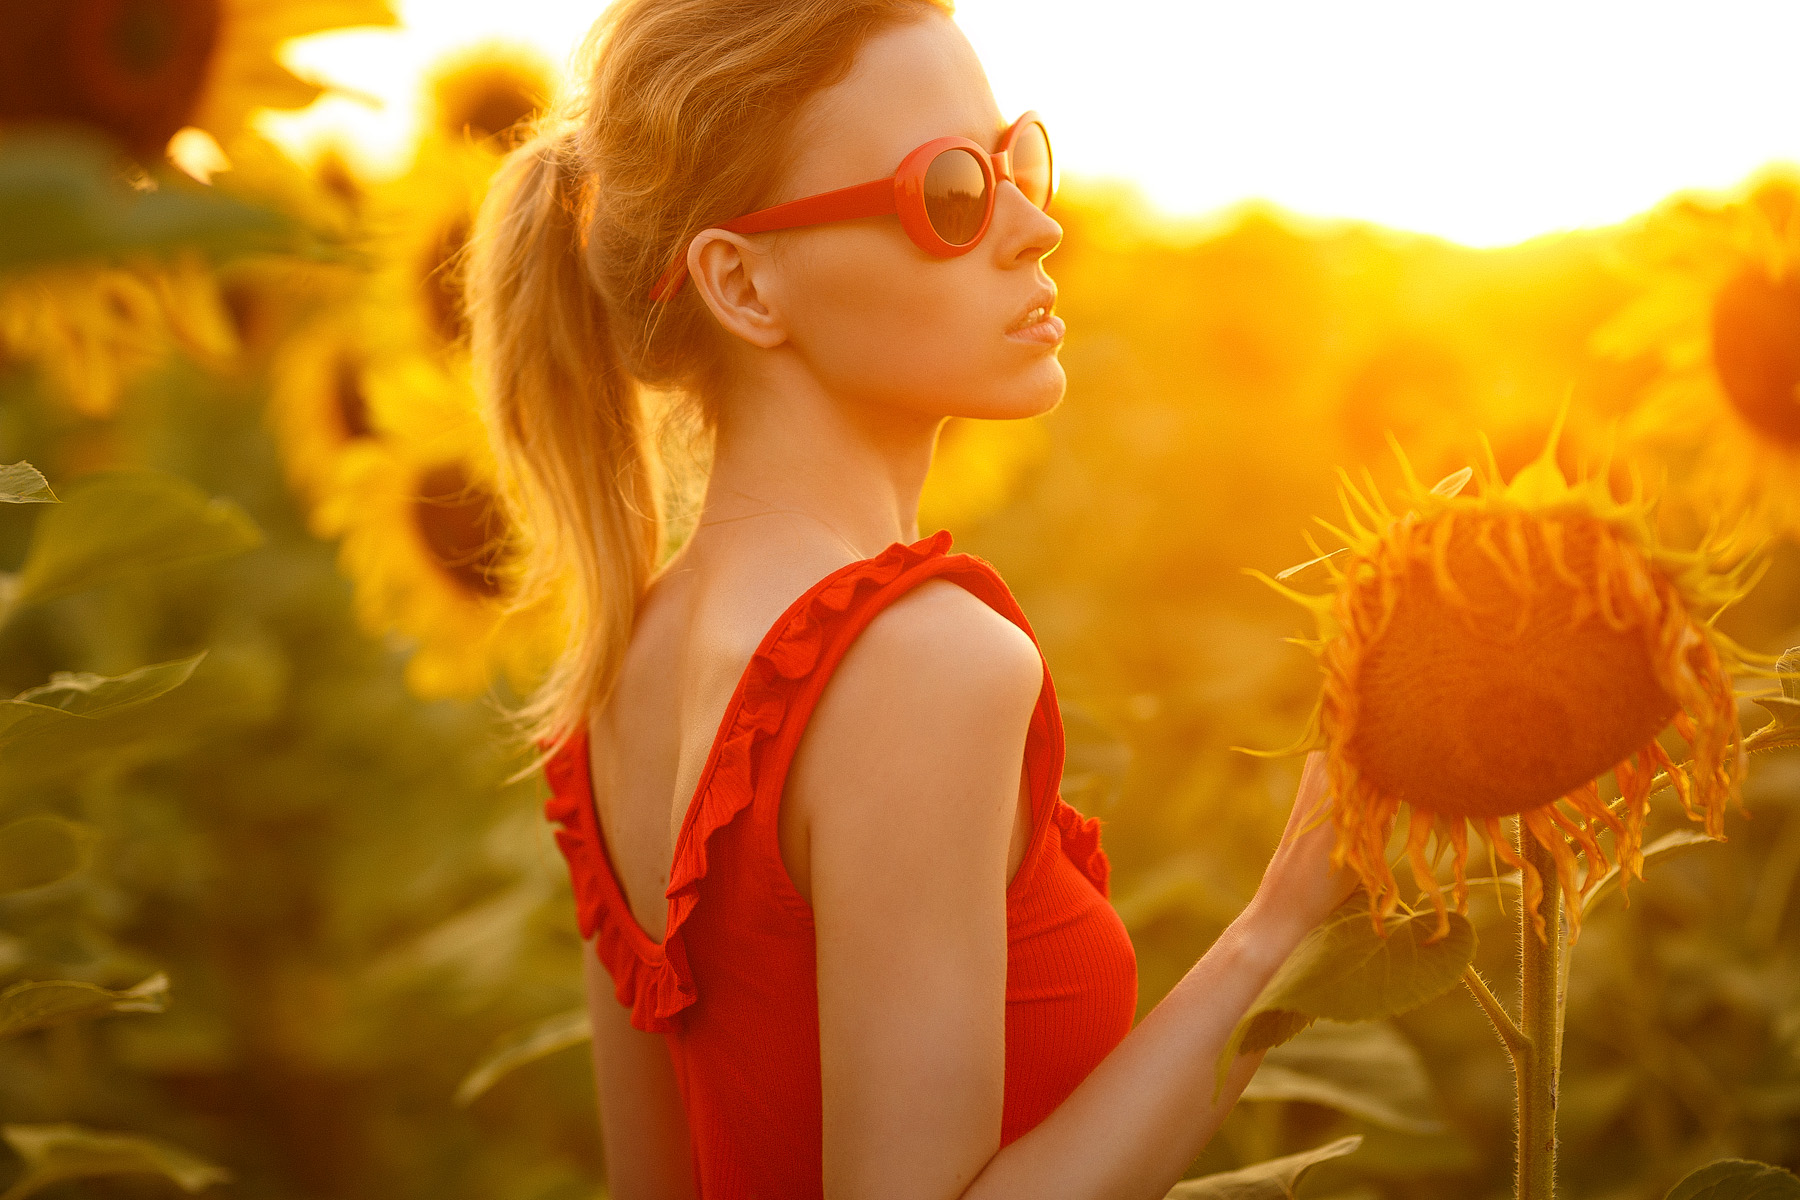 Ivan Vedernikov Maria Amelina Women Blonde Ponytail Women With Shades Sunglasses Sunset Sun Rays Bac 1800x1200